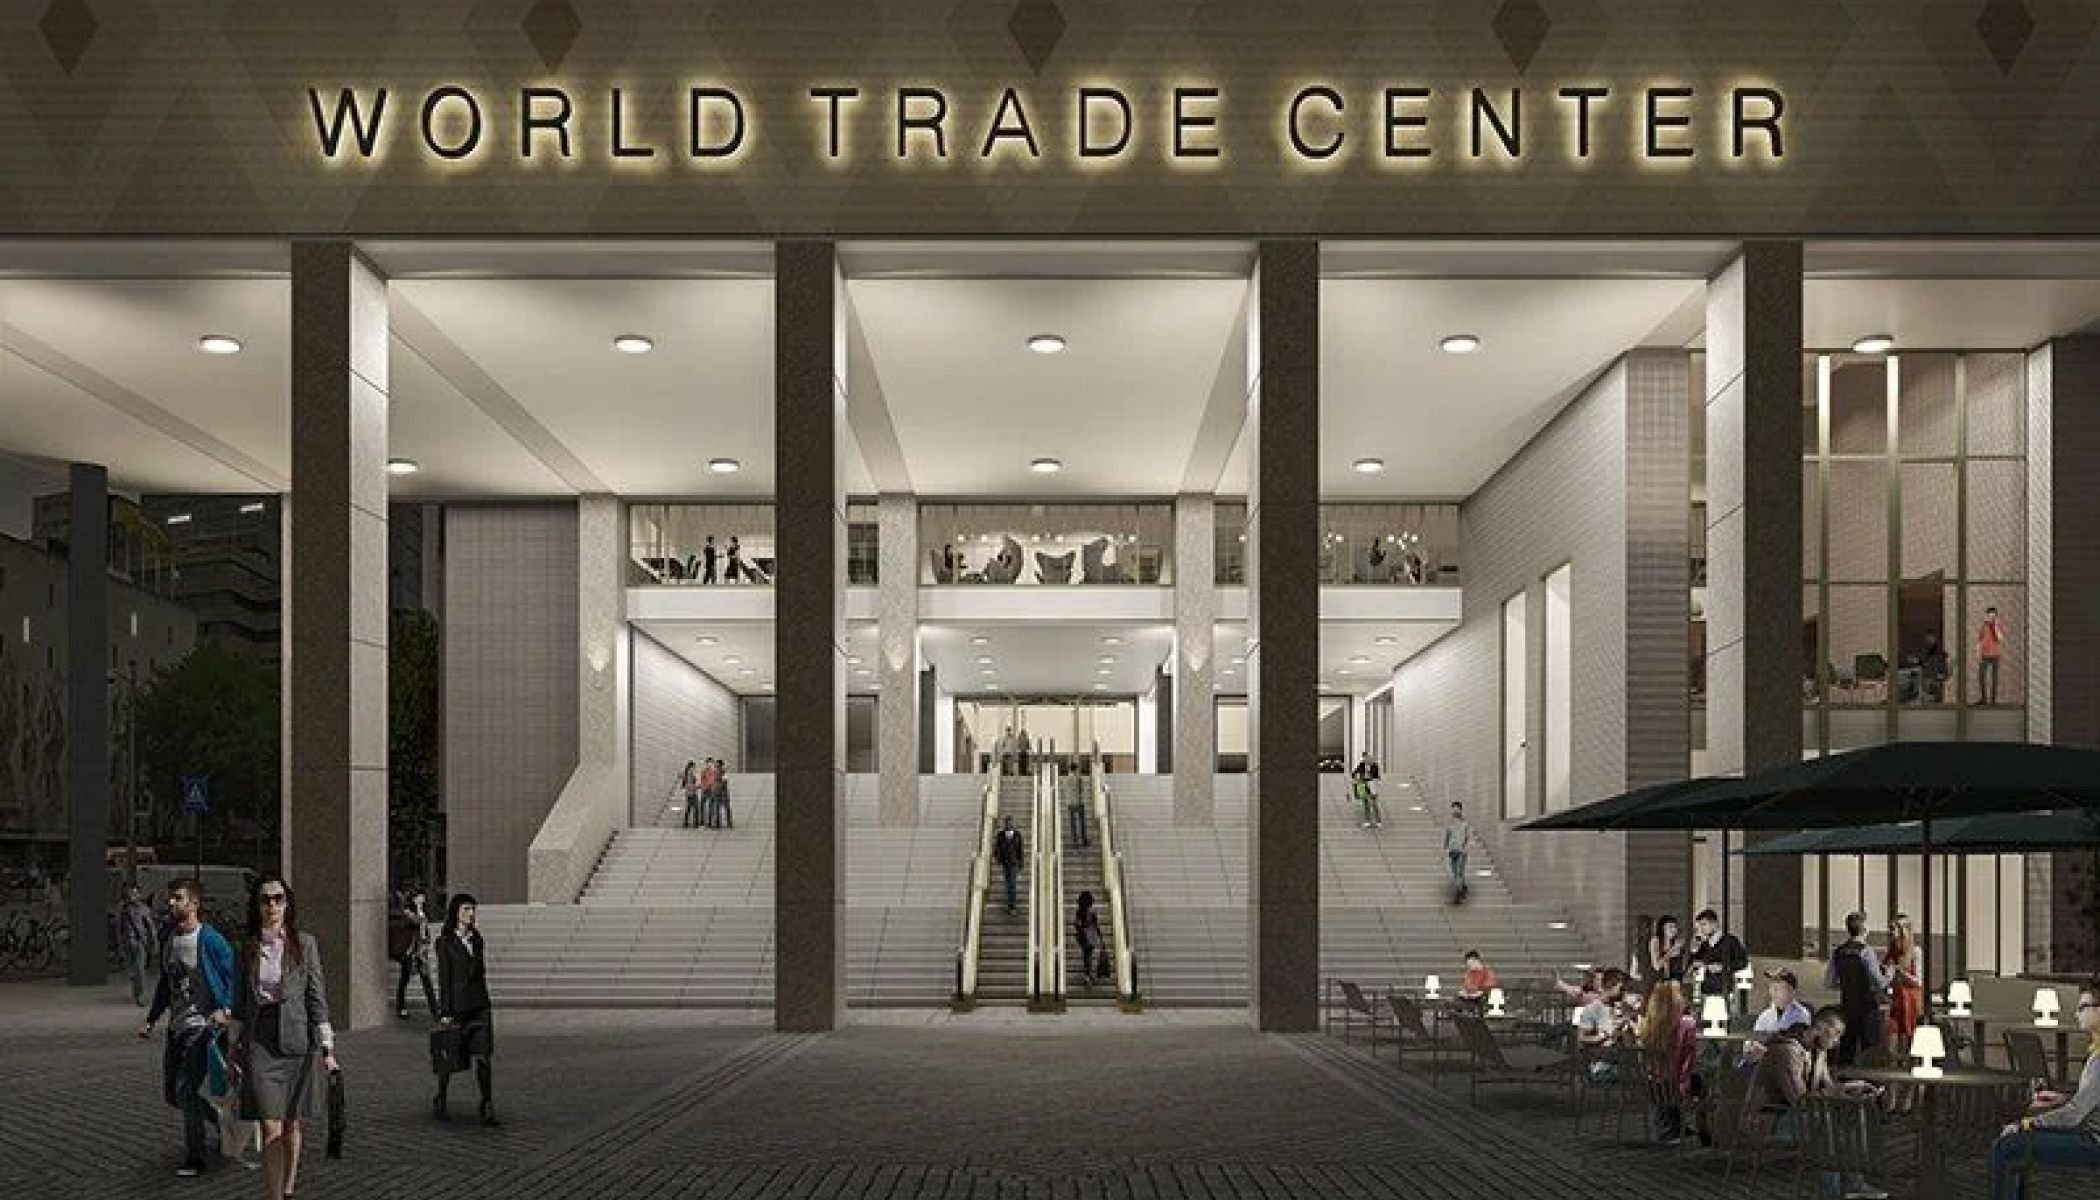 Photo of WTC's entrance